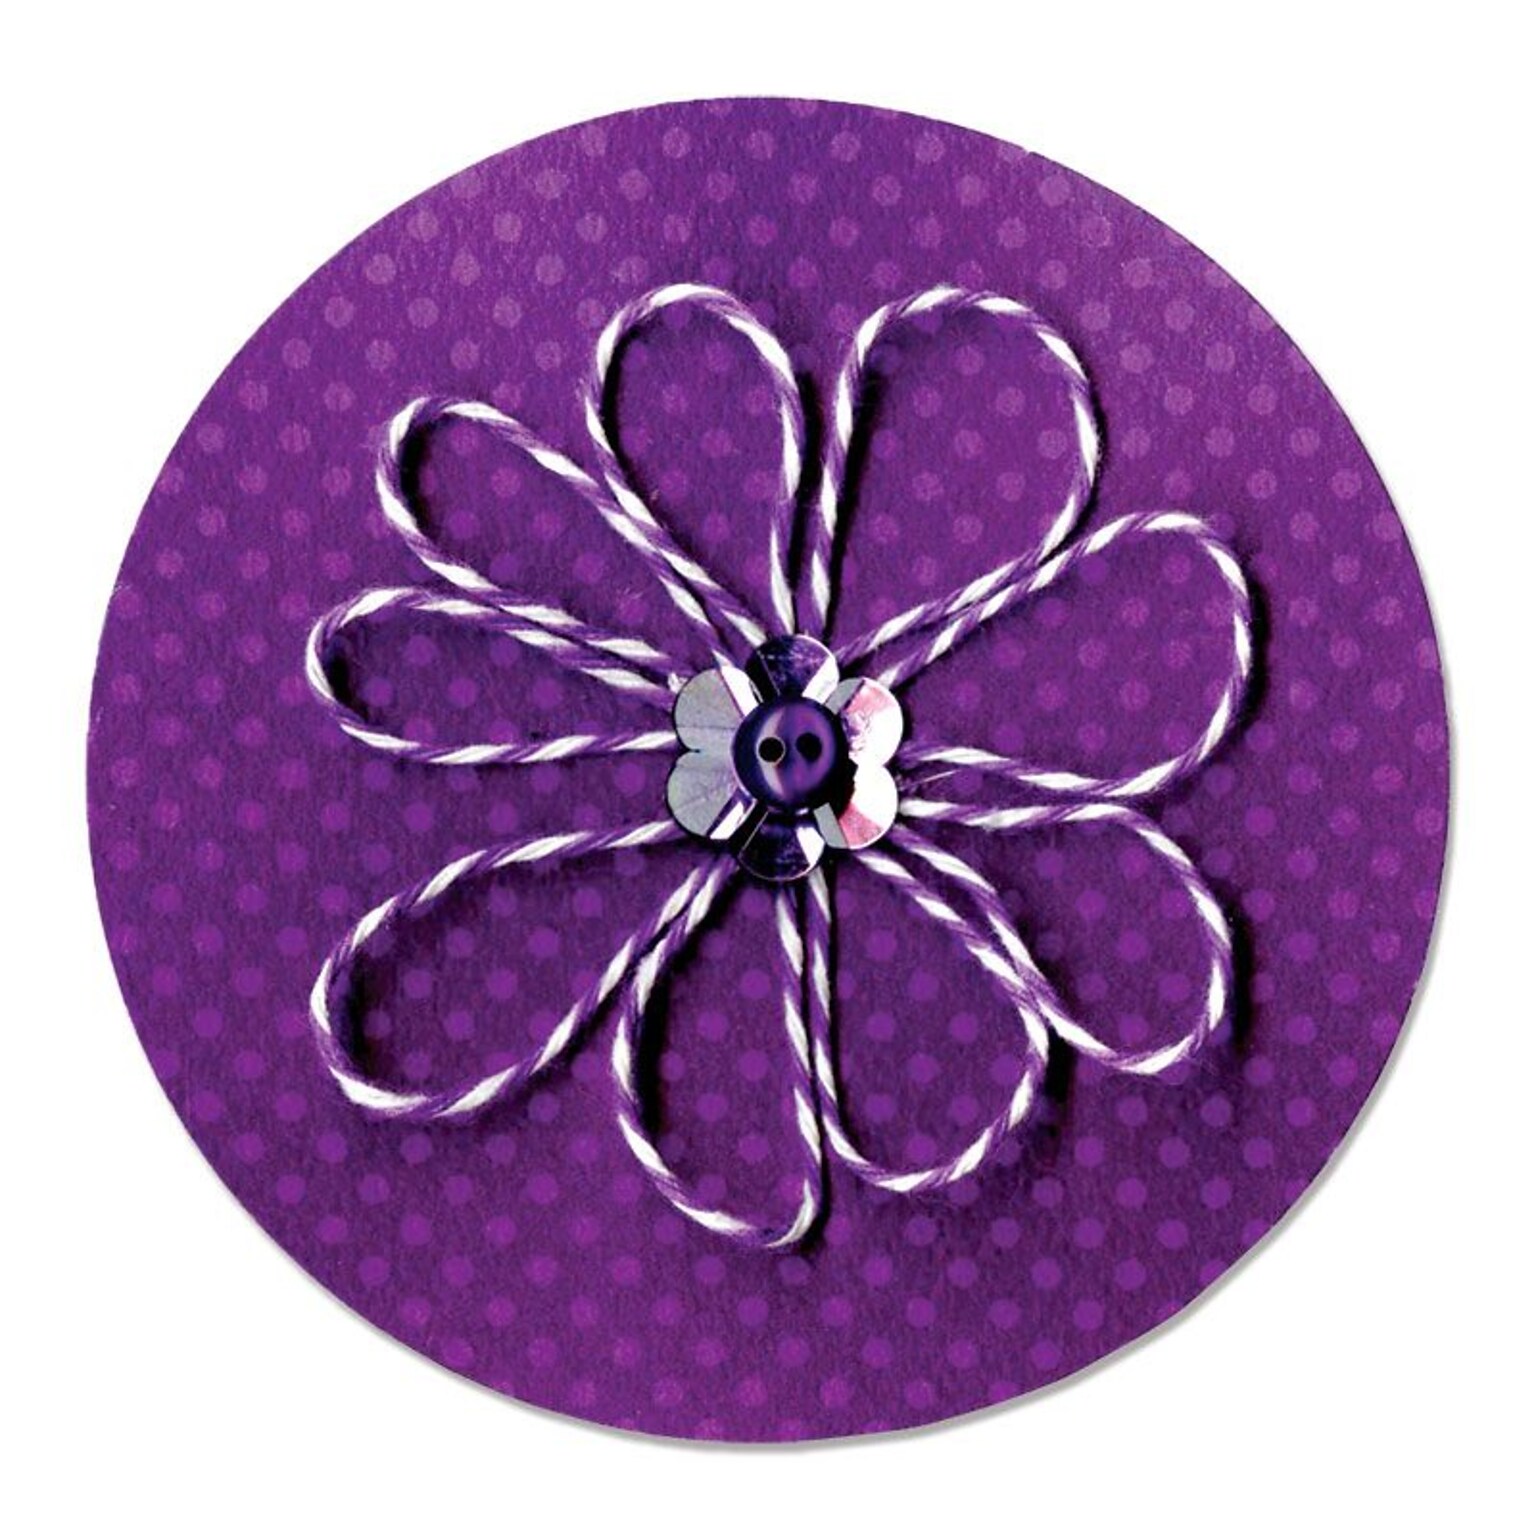 Sizzix Bigz Die Circle Purple 4